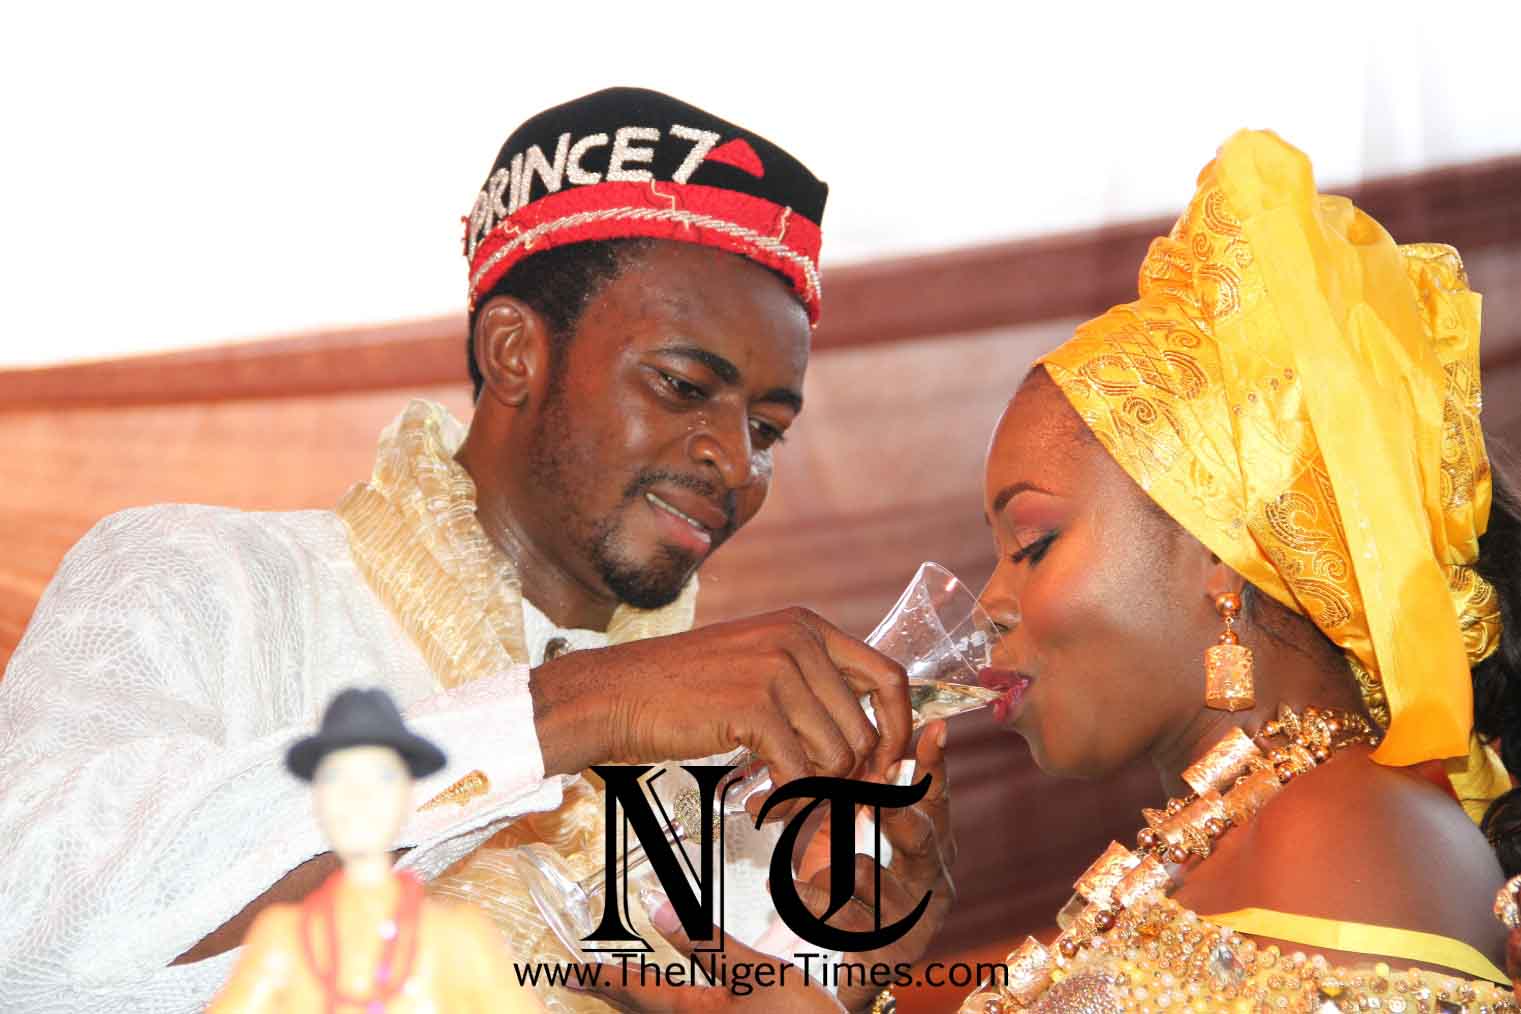 The-niger-times-godswill-faith-wedding-Traditional-Bayelsa-goddluck-60.jpg